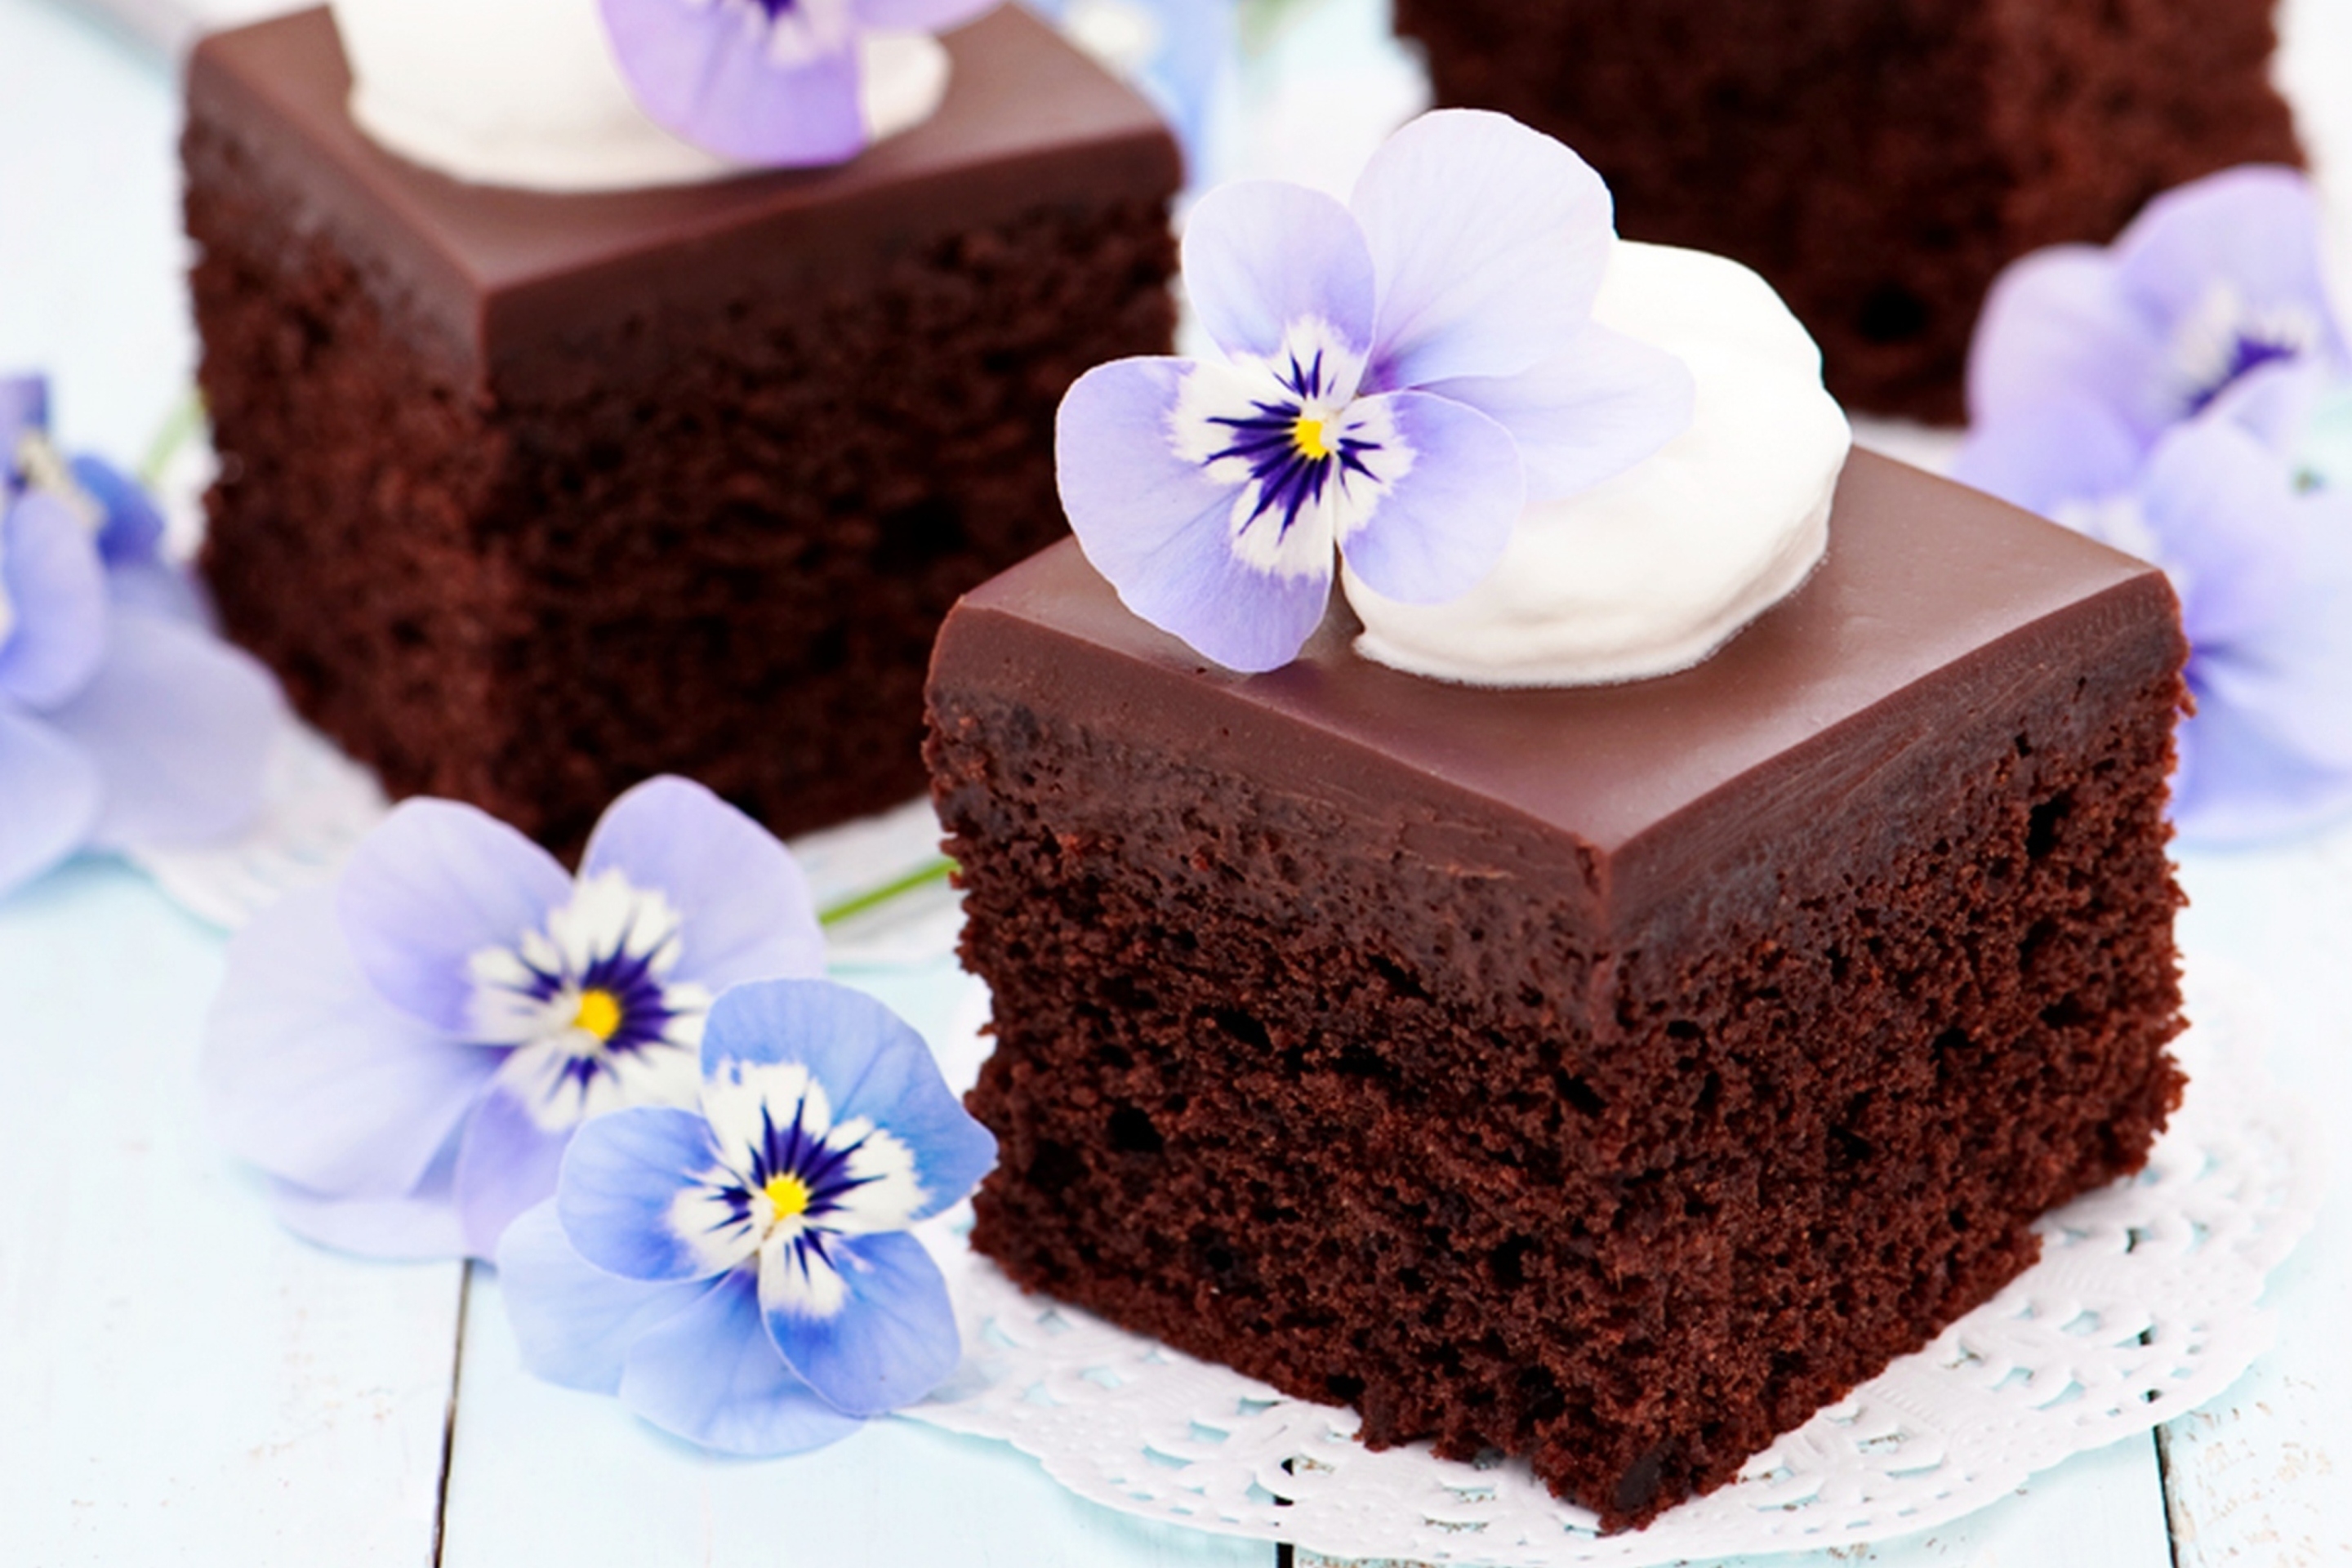 Chocolate Dessert - Chocolate Wallpaper (39156568) - Fanpop